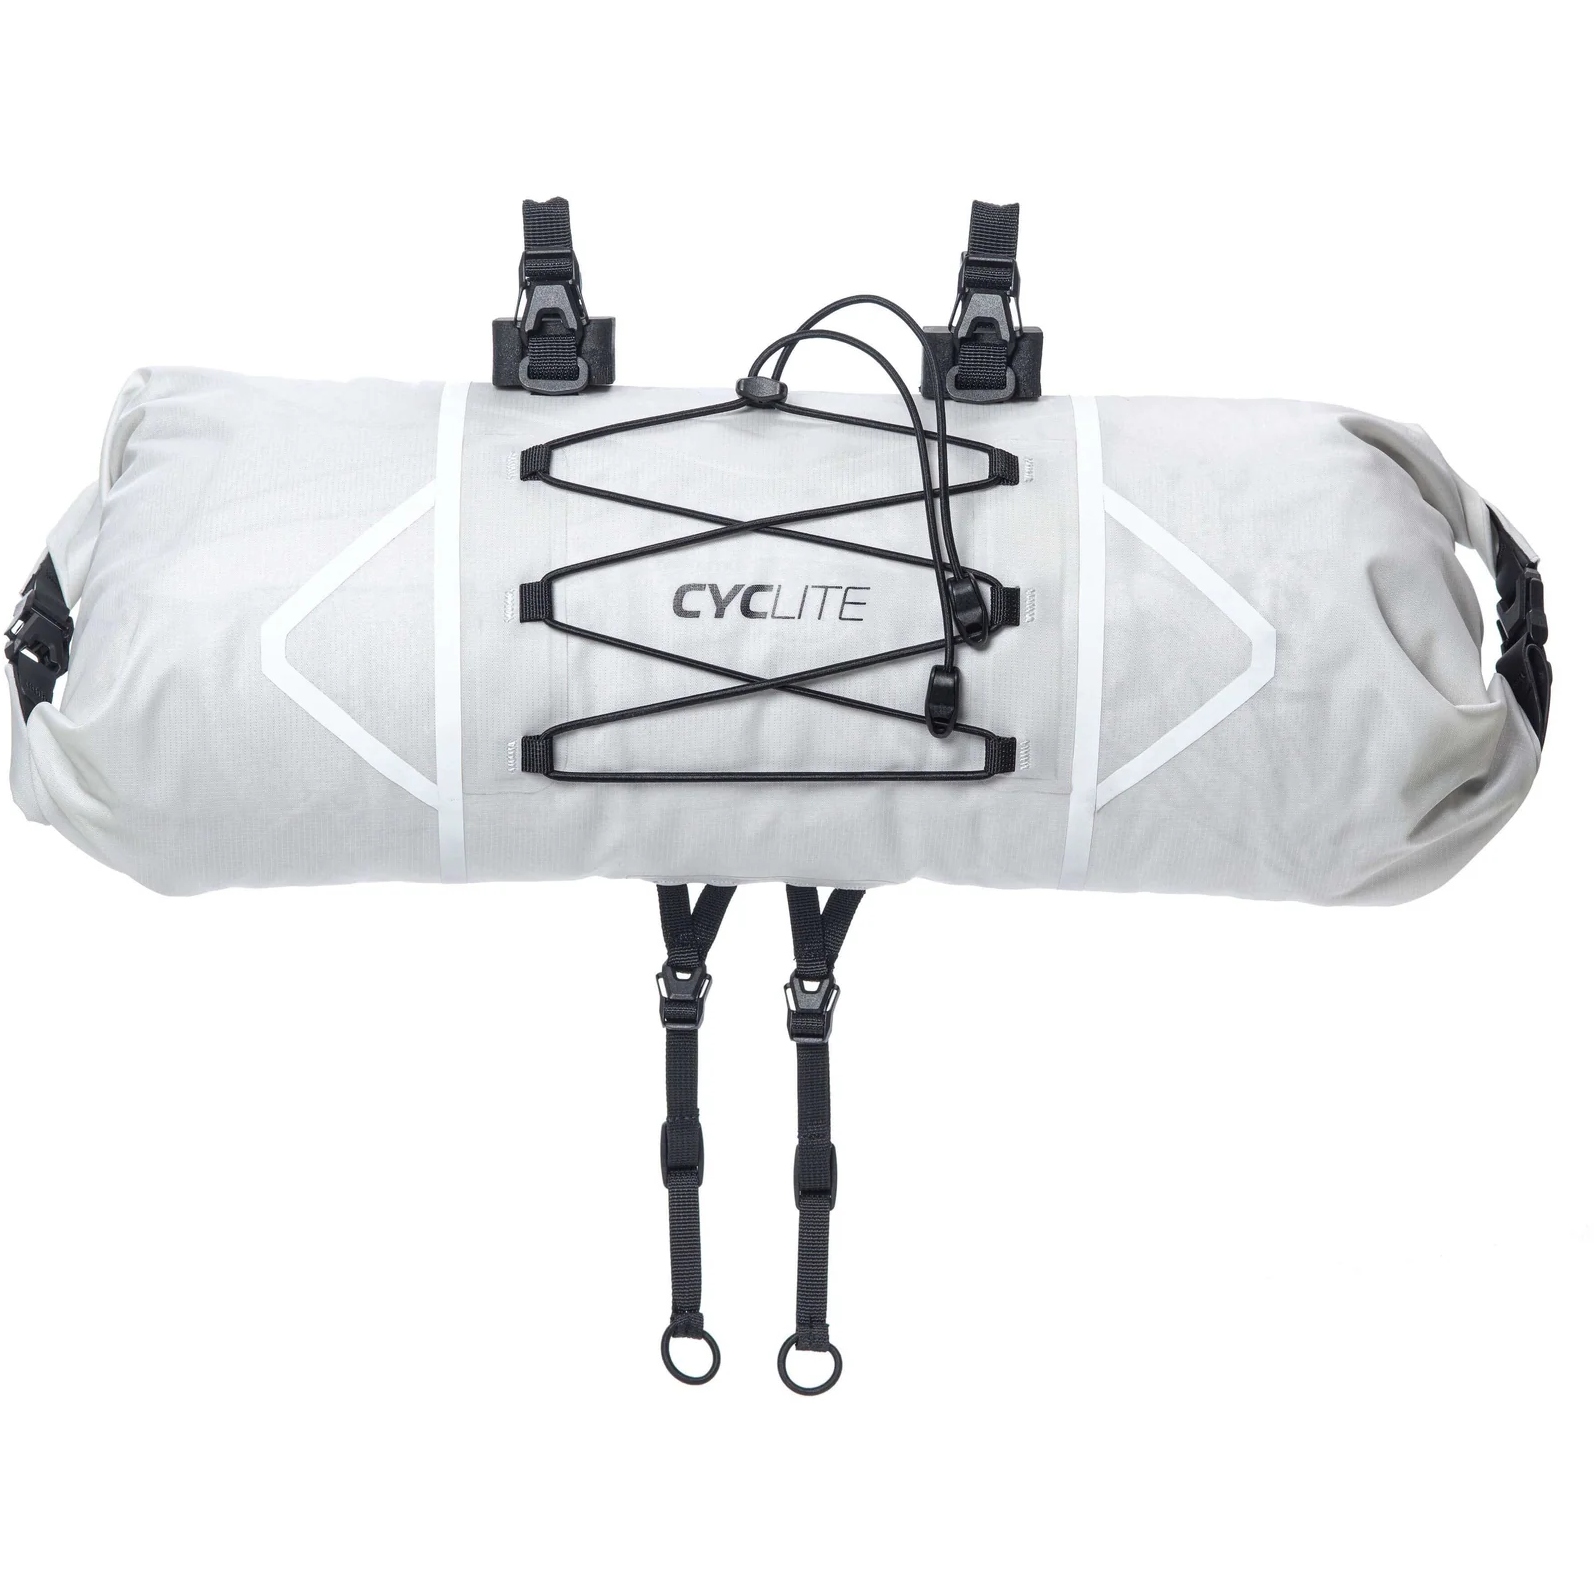 Productfoto van Cyclite Roll Bag Stuurtas 12,6L - Light Grey